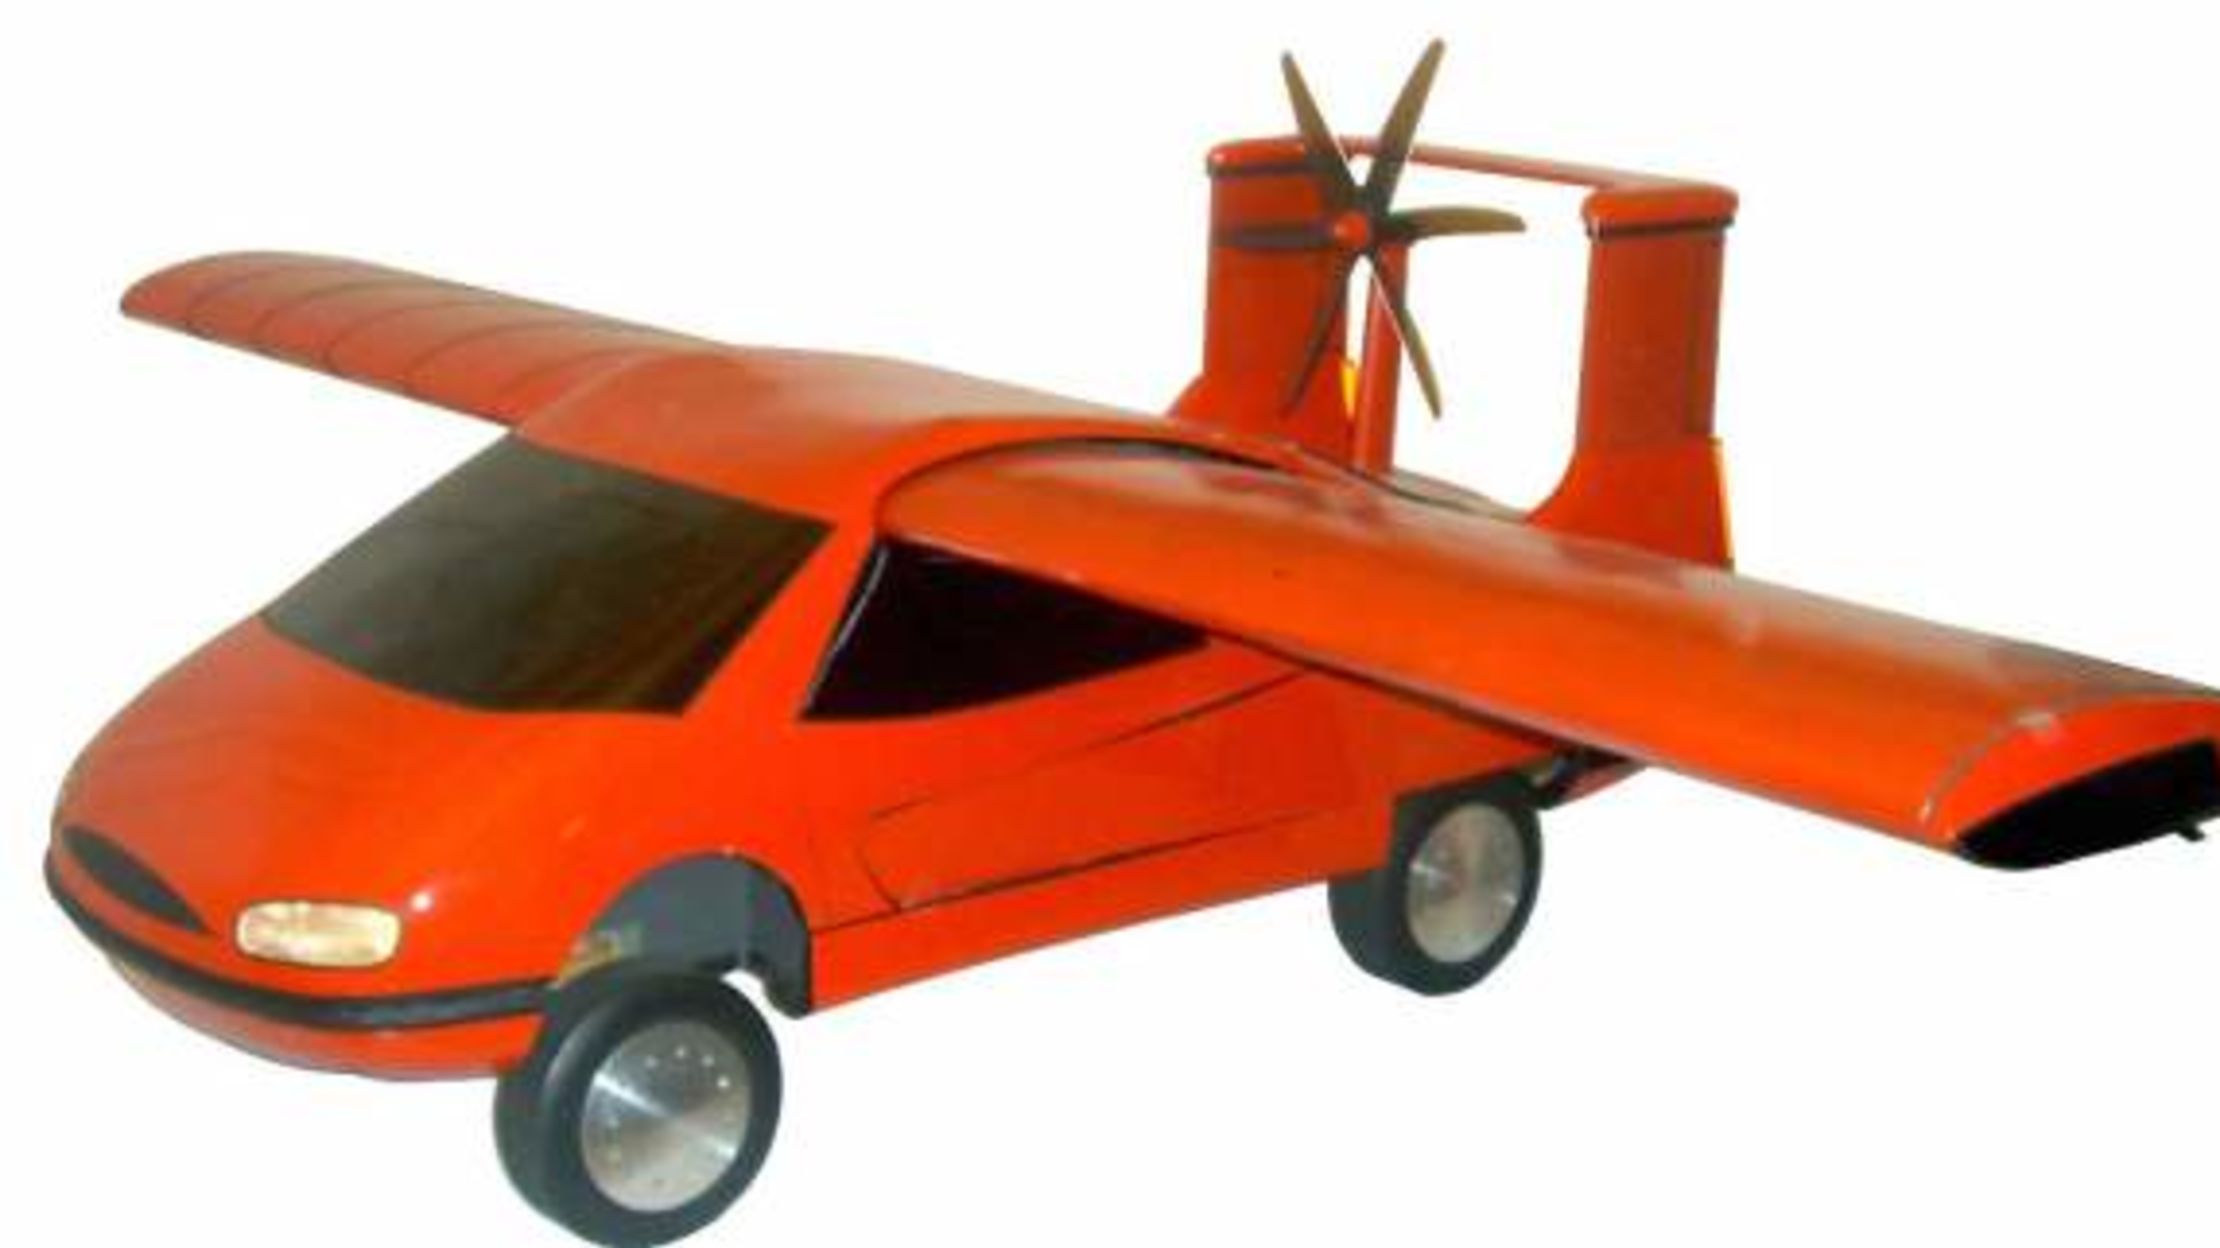 airplane car toy